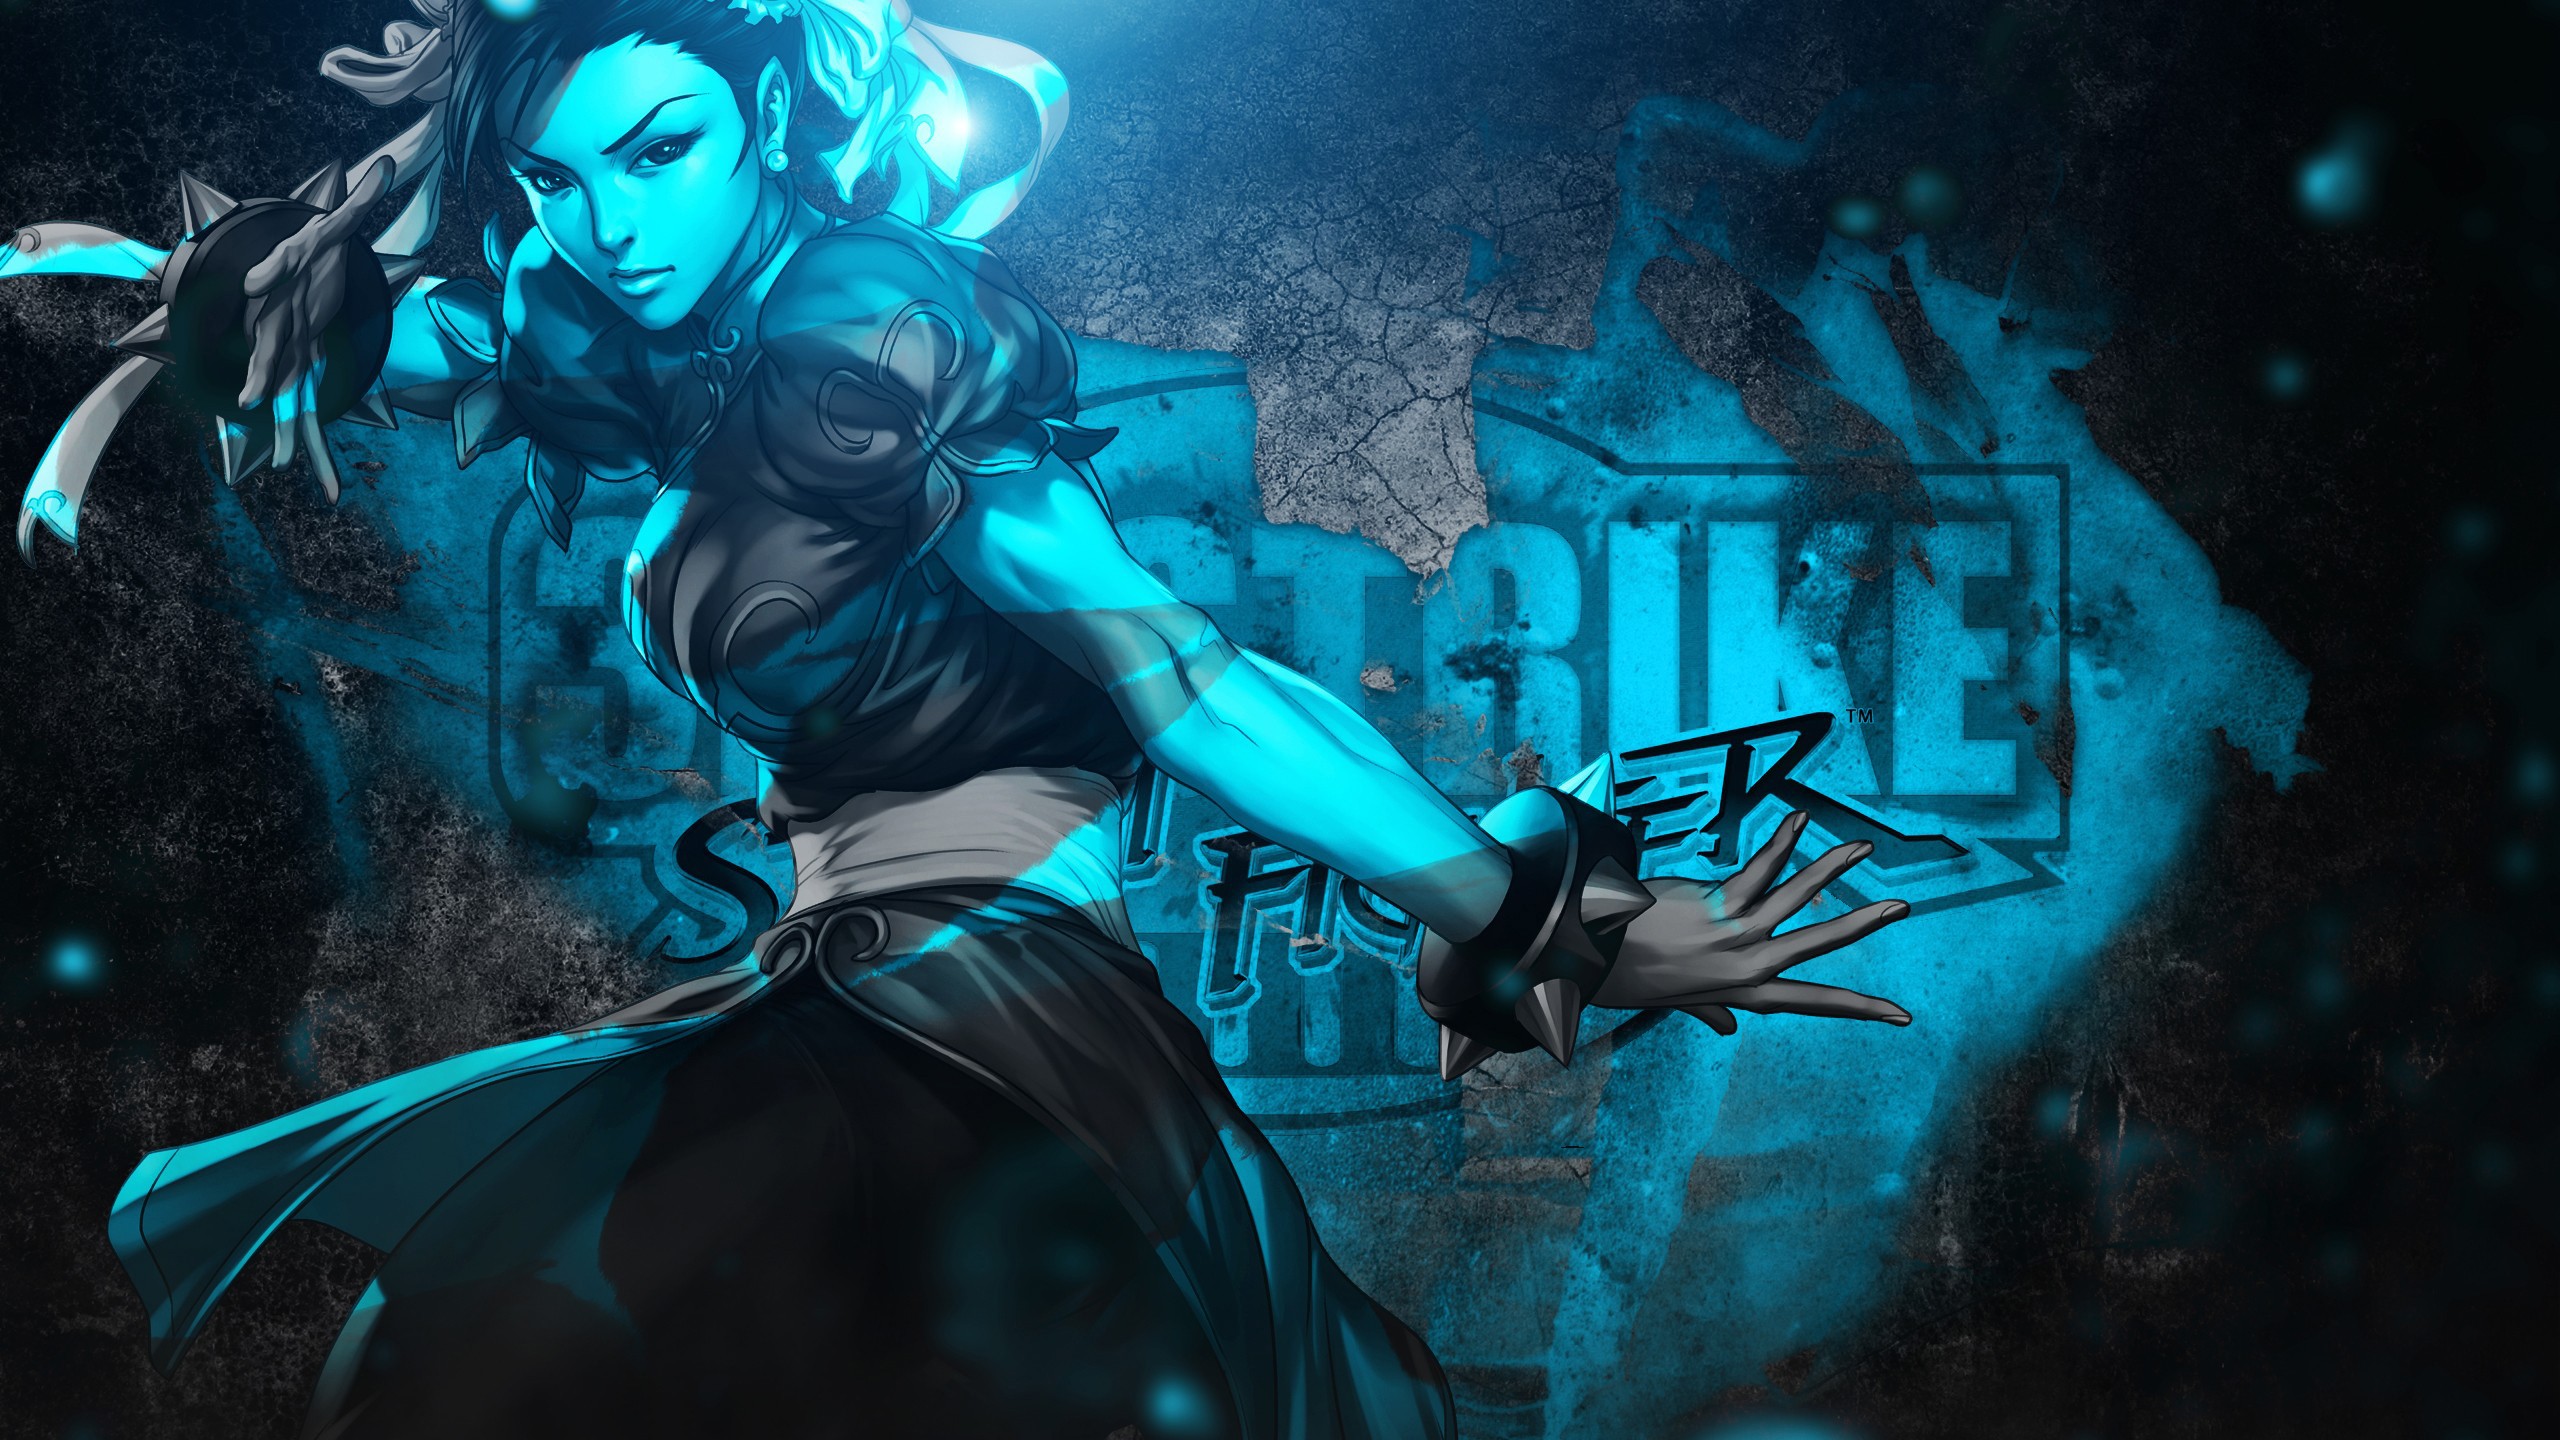 General 2560x1440 Street Fighter Chun-Li video games video game art video game warriors women Street Fighter 3RD Strike cyan blue